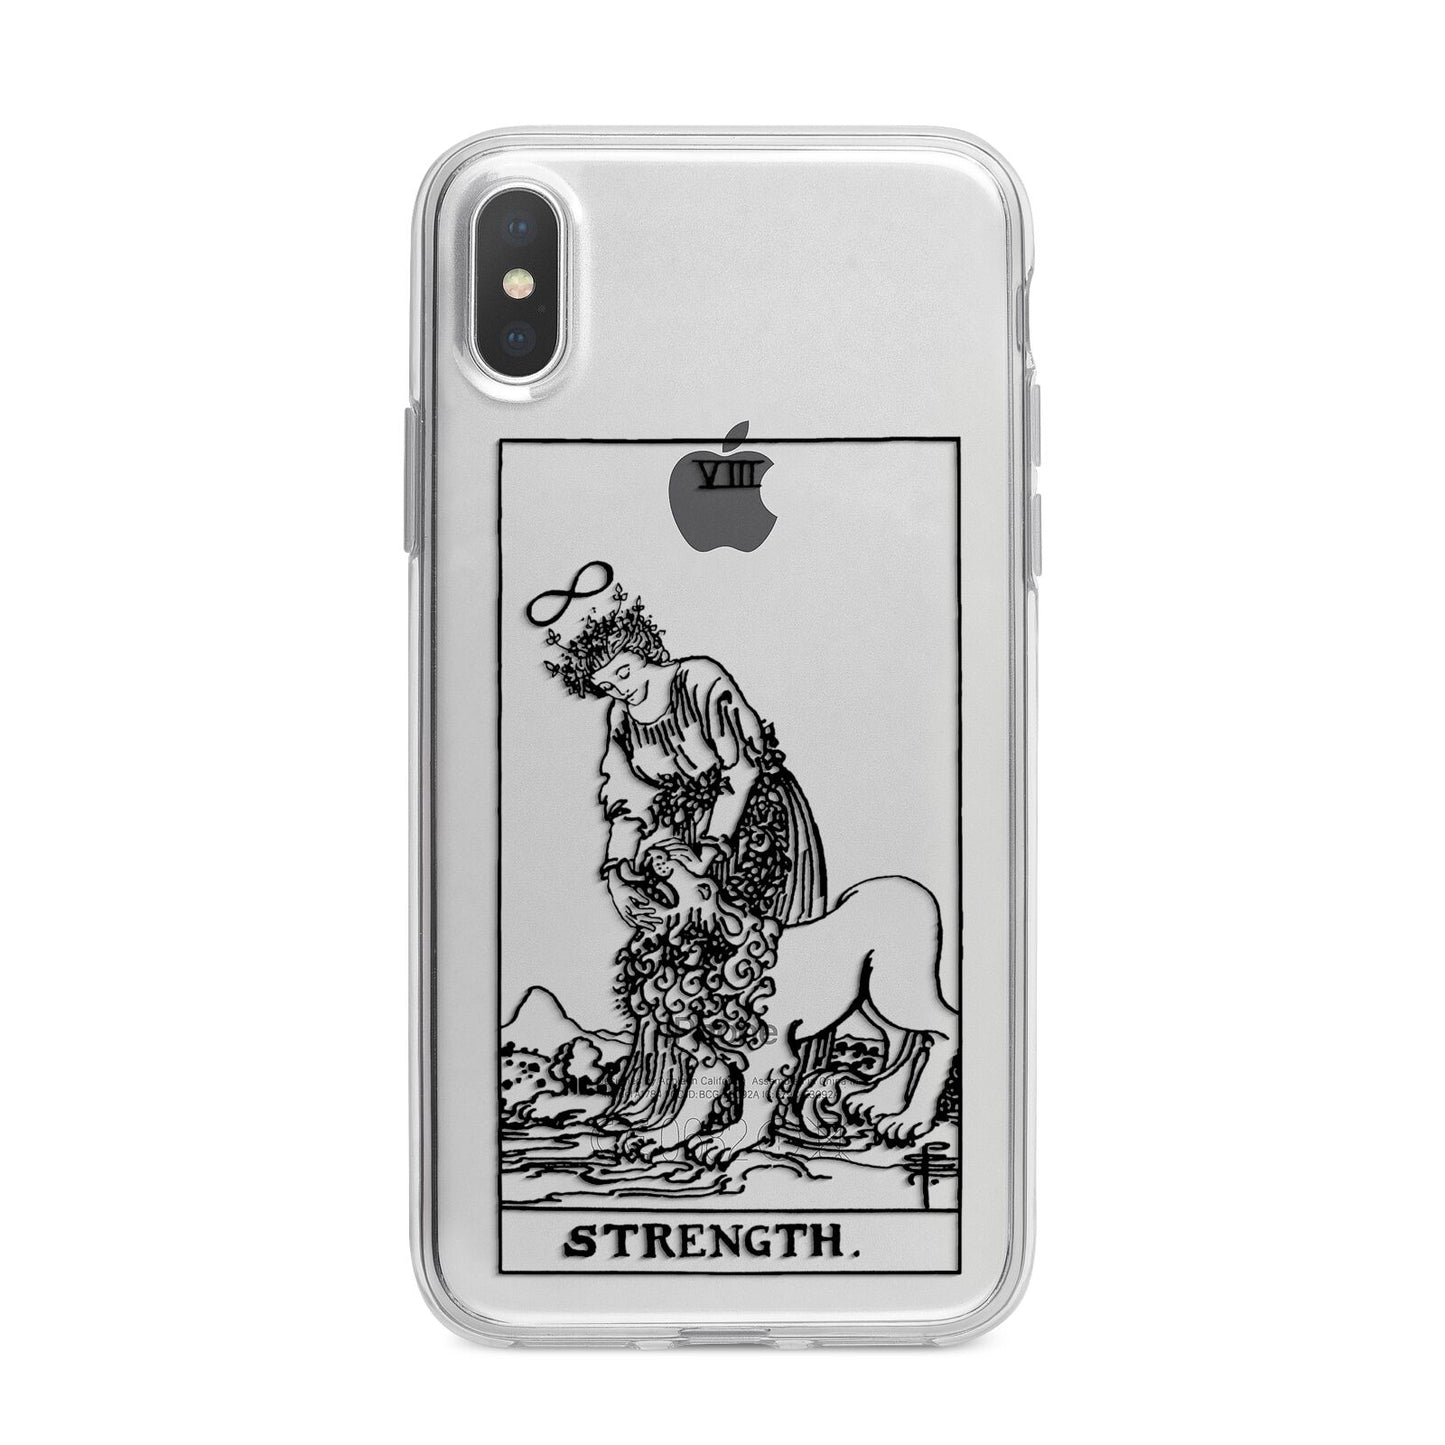 Strength Monochrome Tarot Card iPhone X Bumper Case on Silver iPhone Alternative Image 1